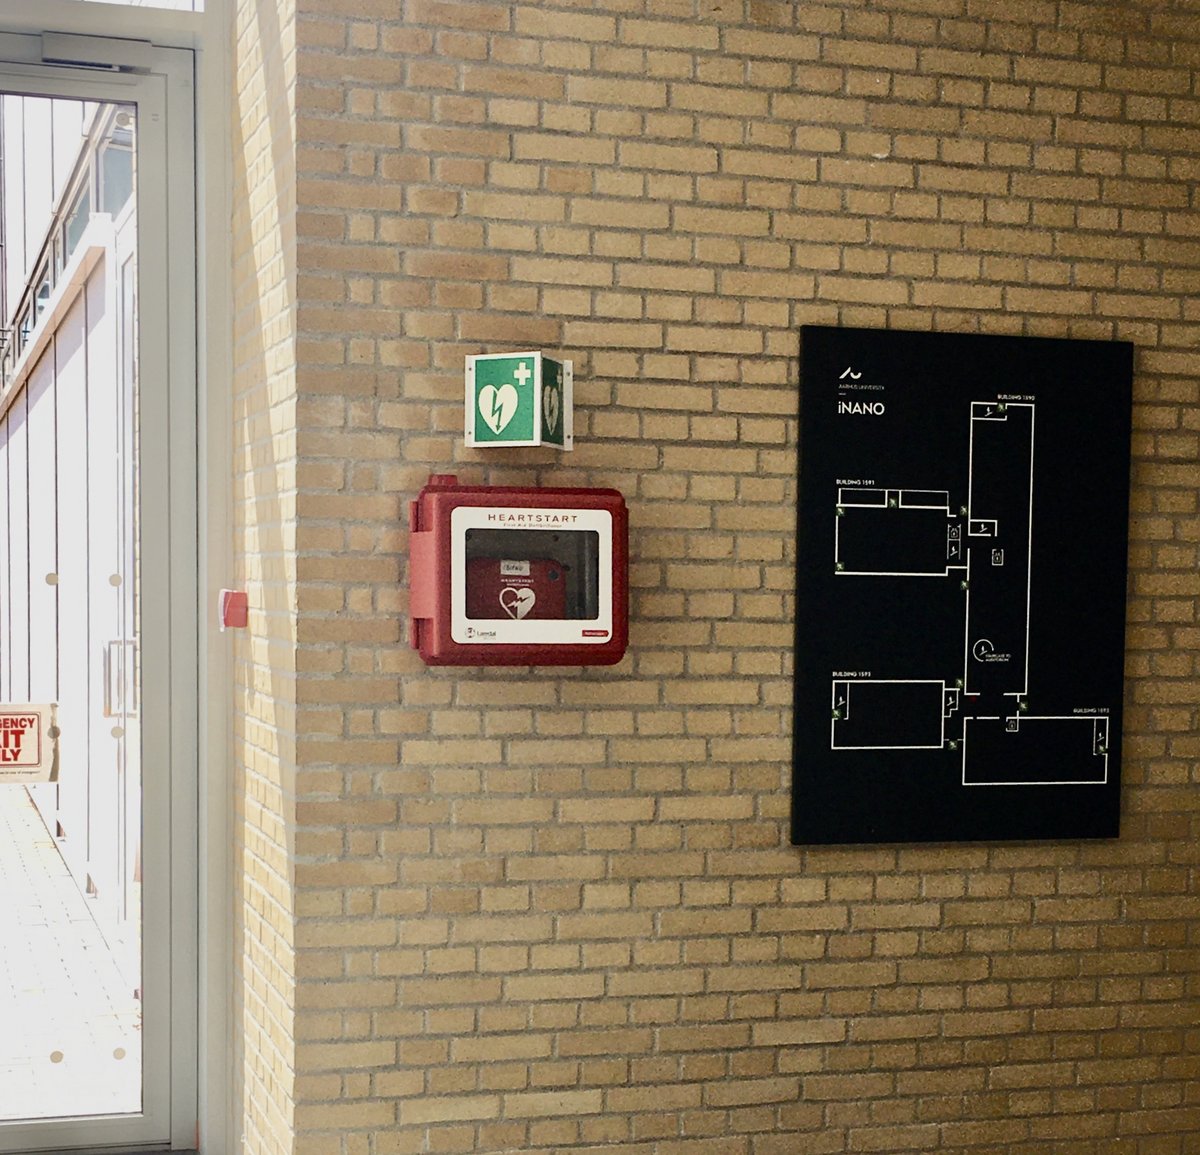 Defribrillator at iNANO, Aarhus University